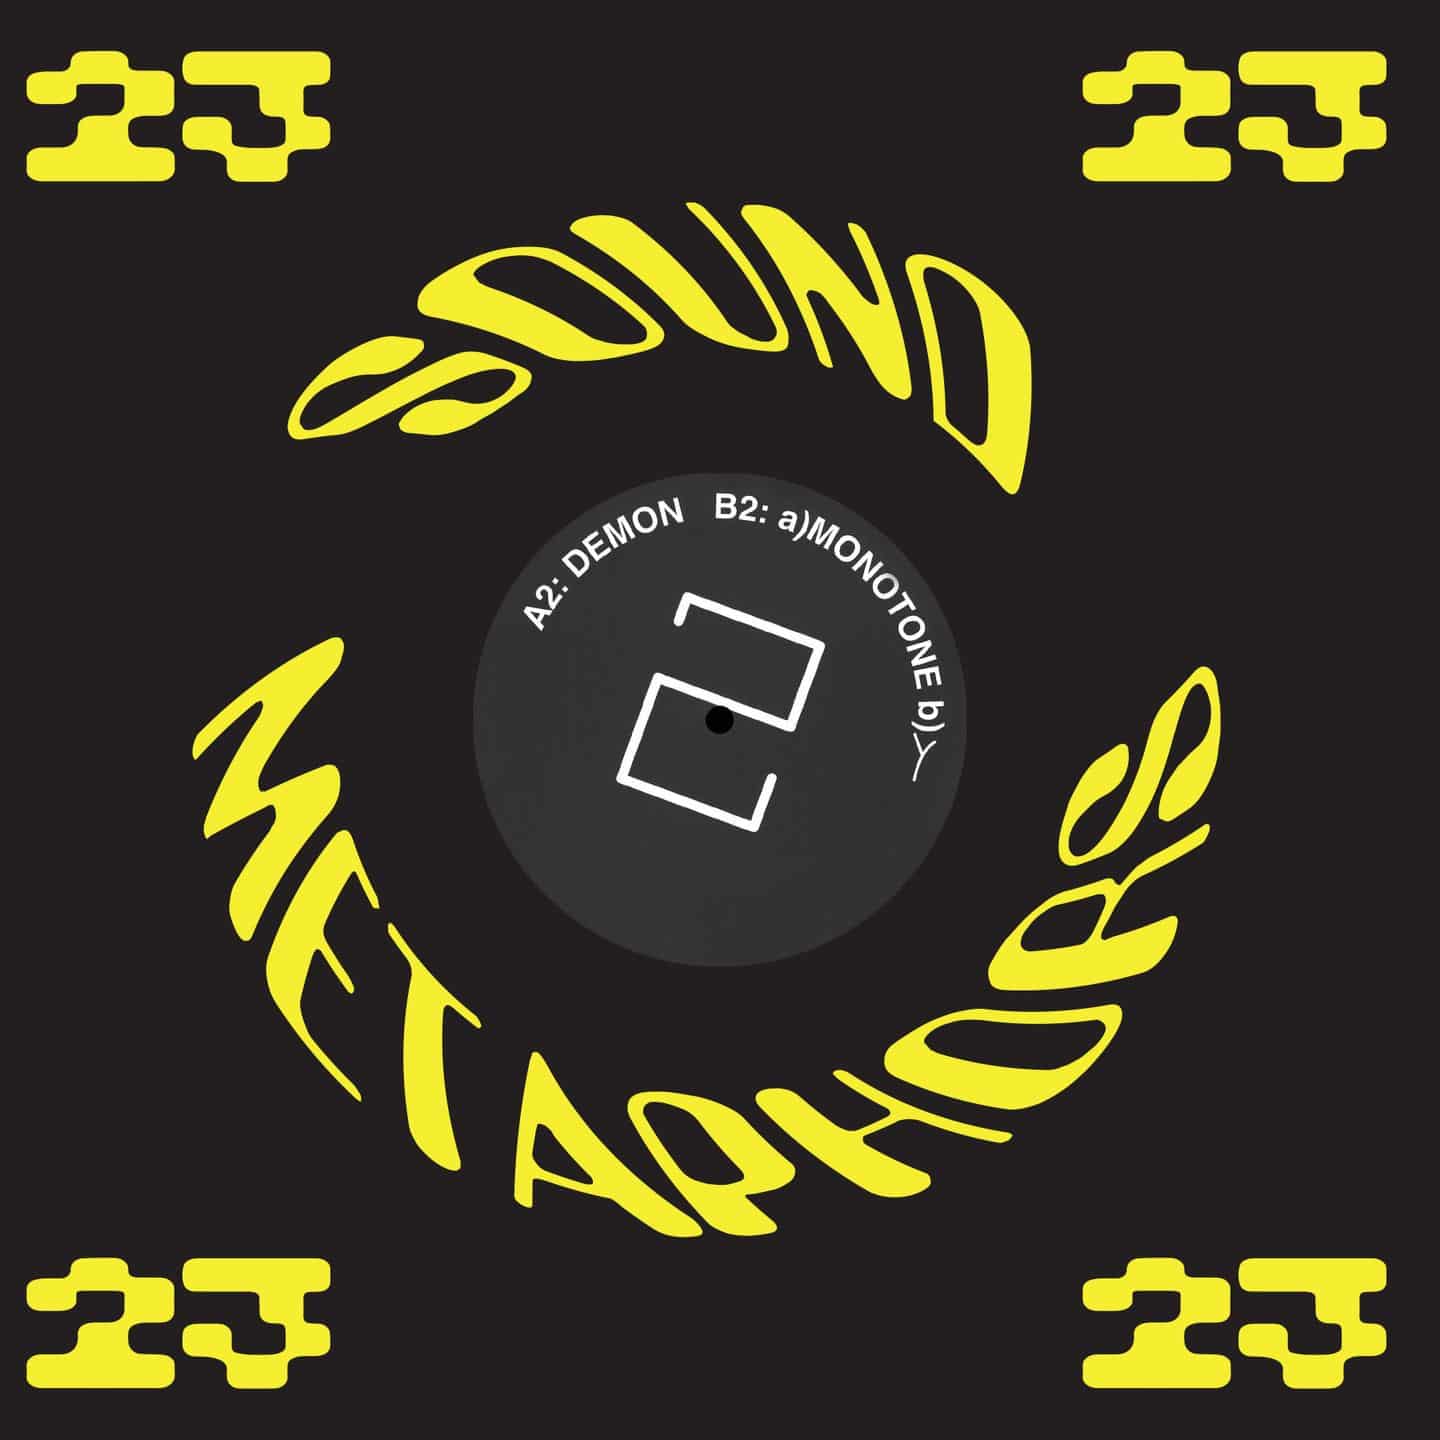 R-Zac 2/Spiral Tribe - EP R-Zac - SM23-03 - SOUND METAPHORS RECORDS